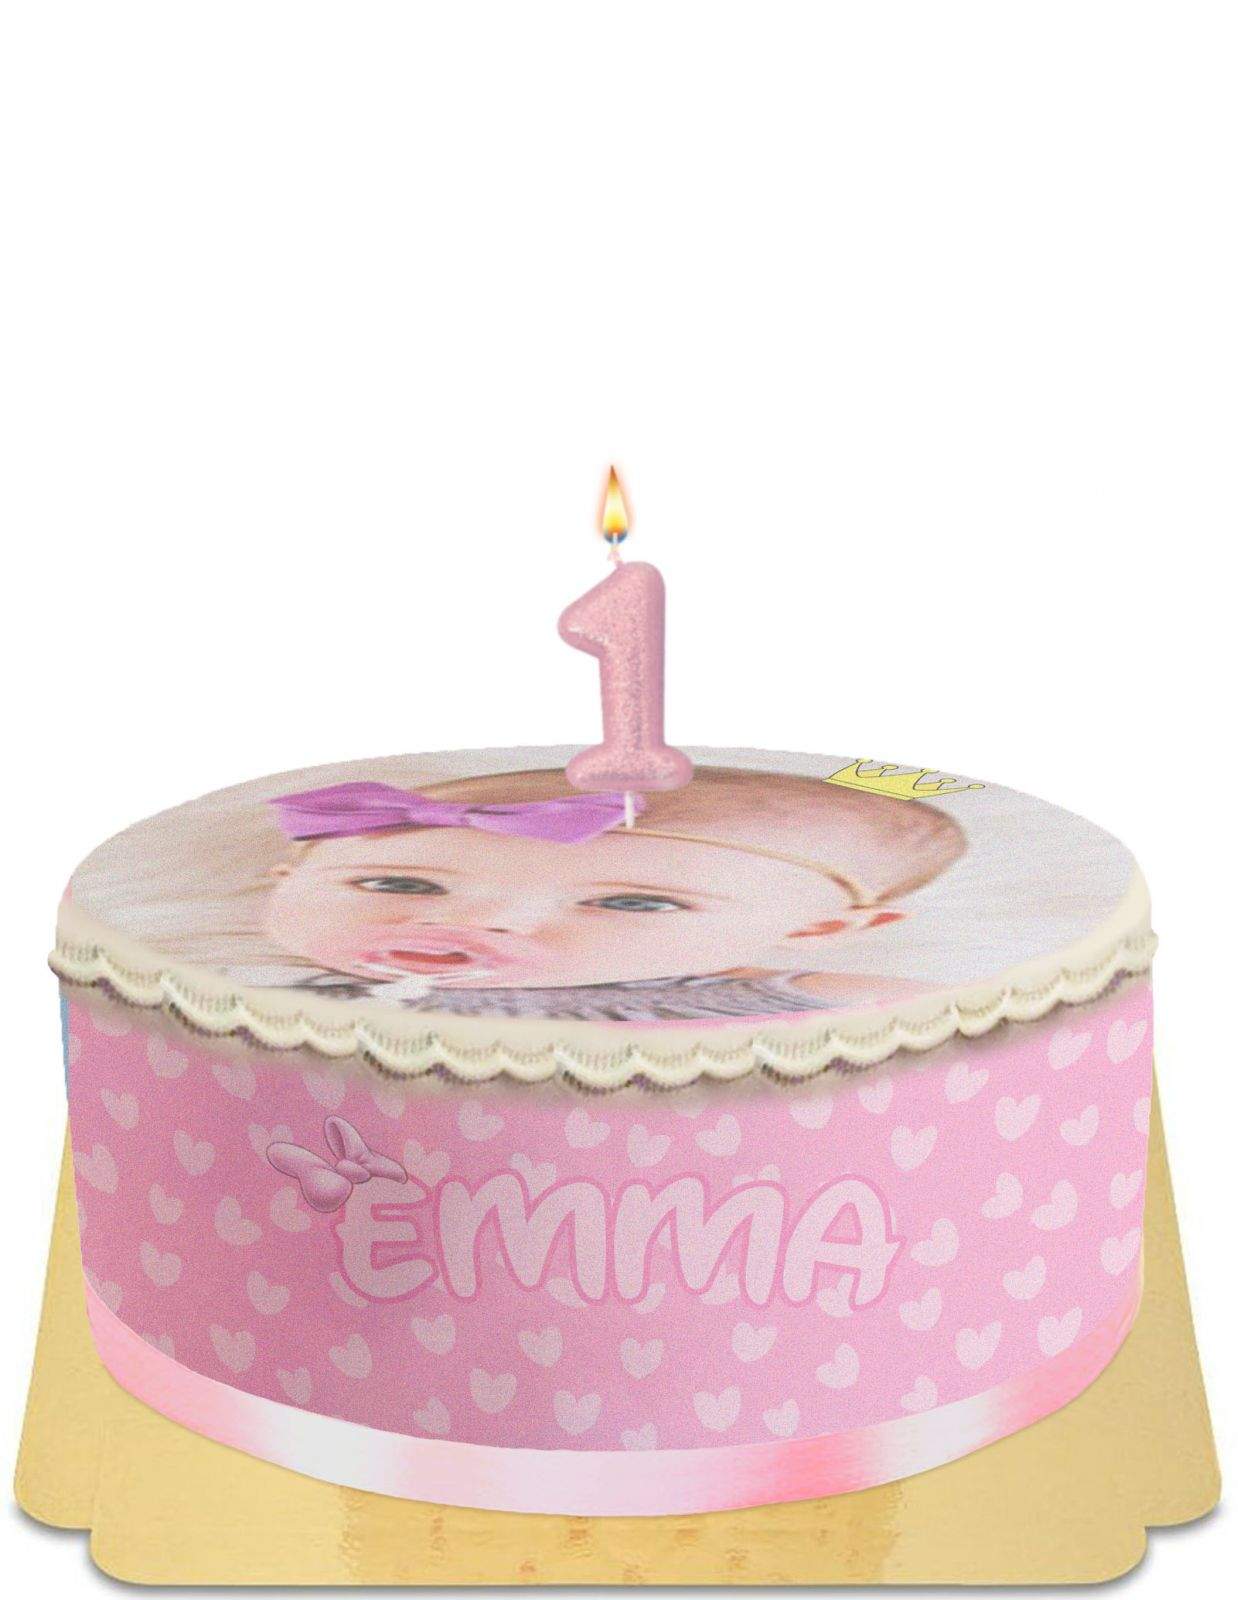 File:Birthday Cake with 2.jpg - Wikipedia